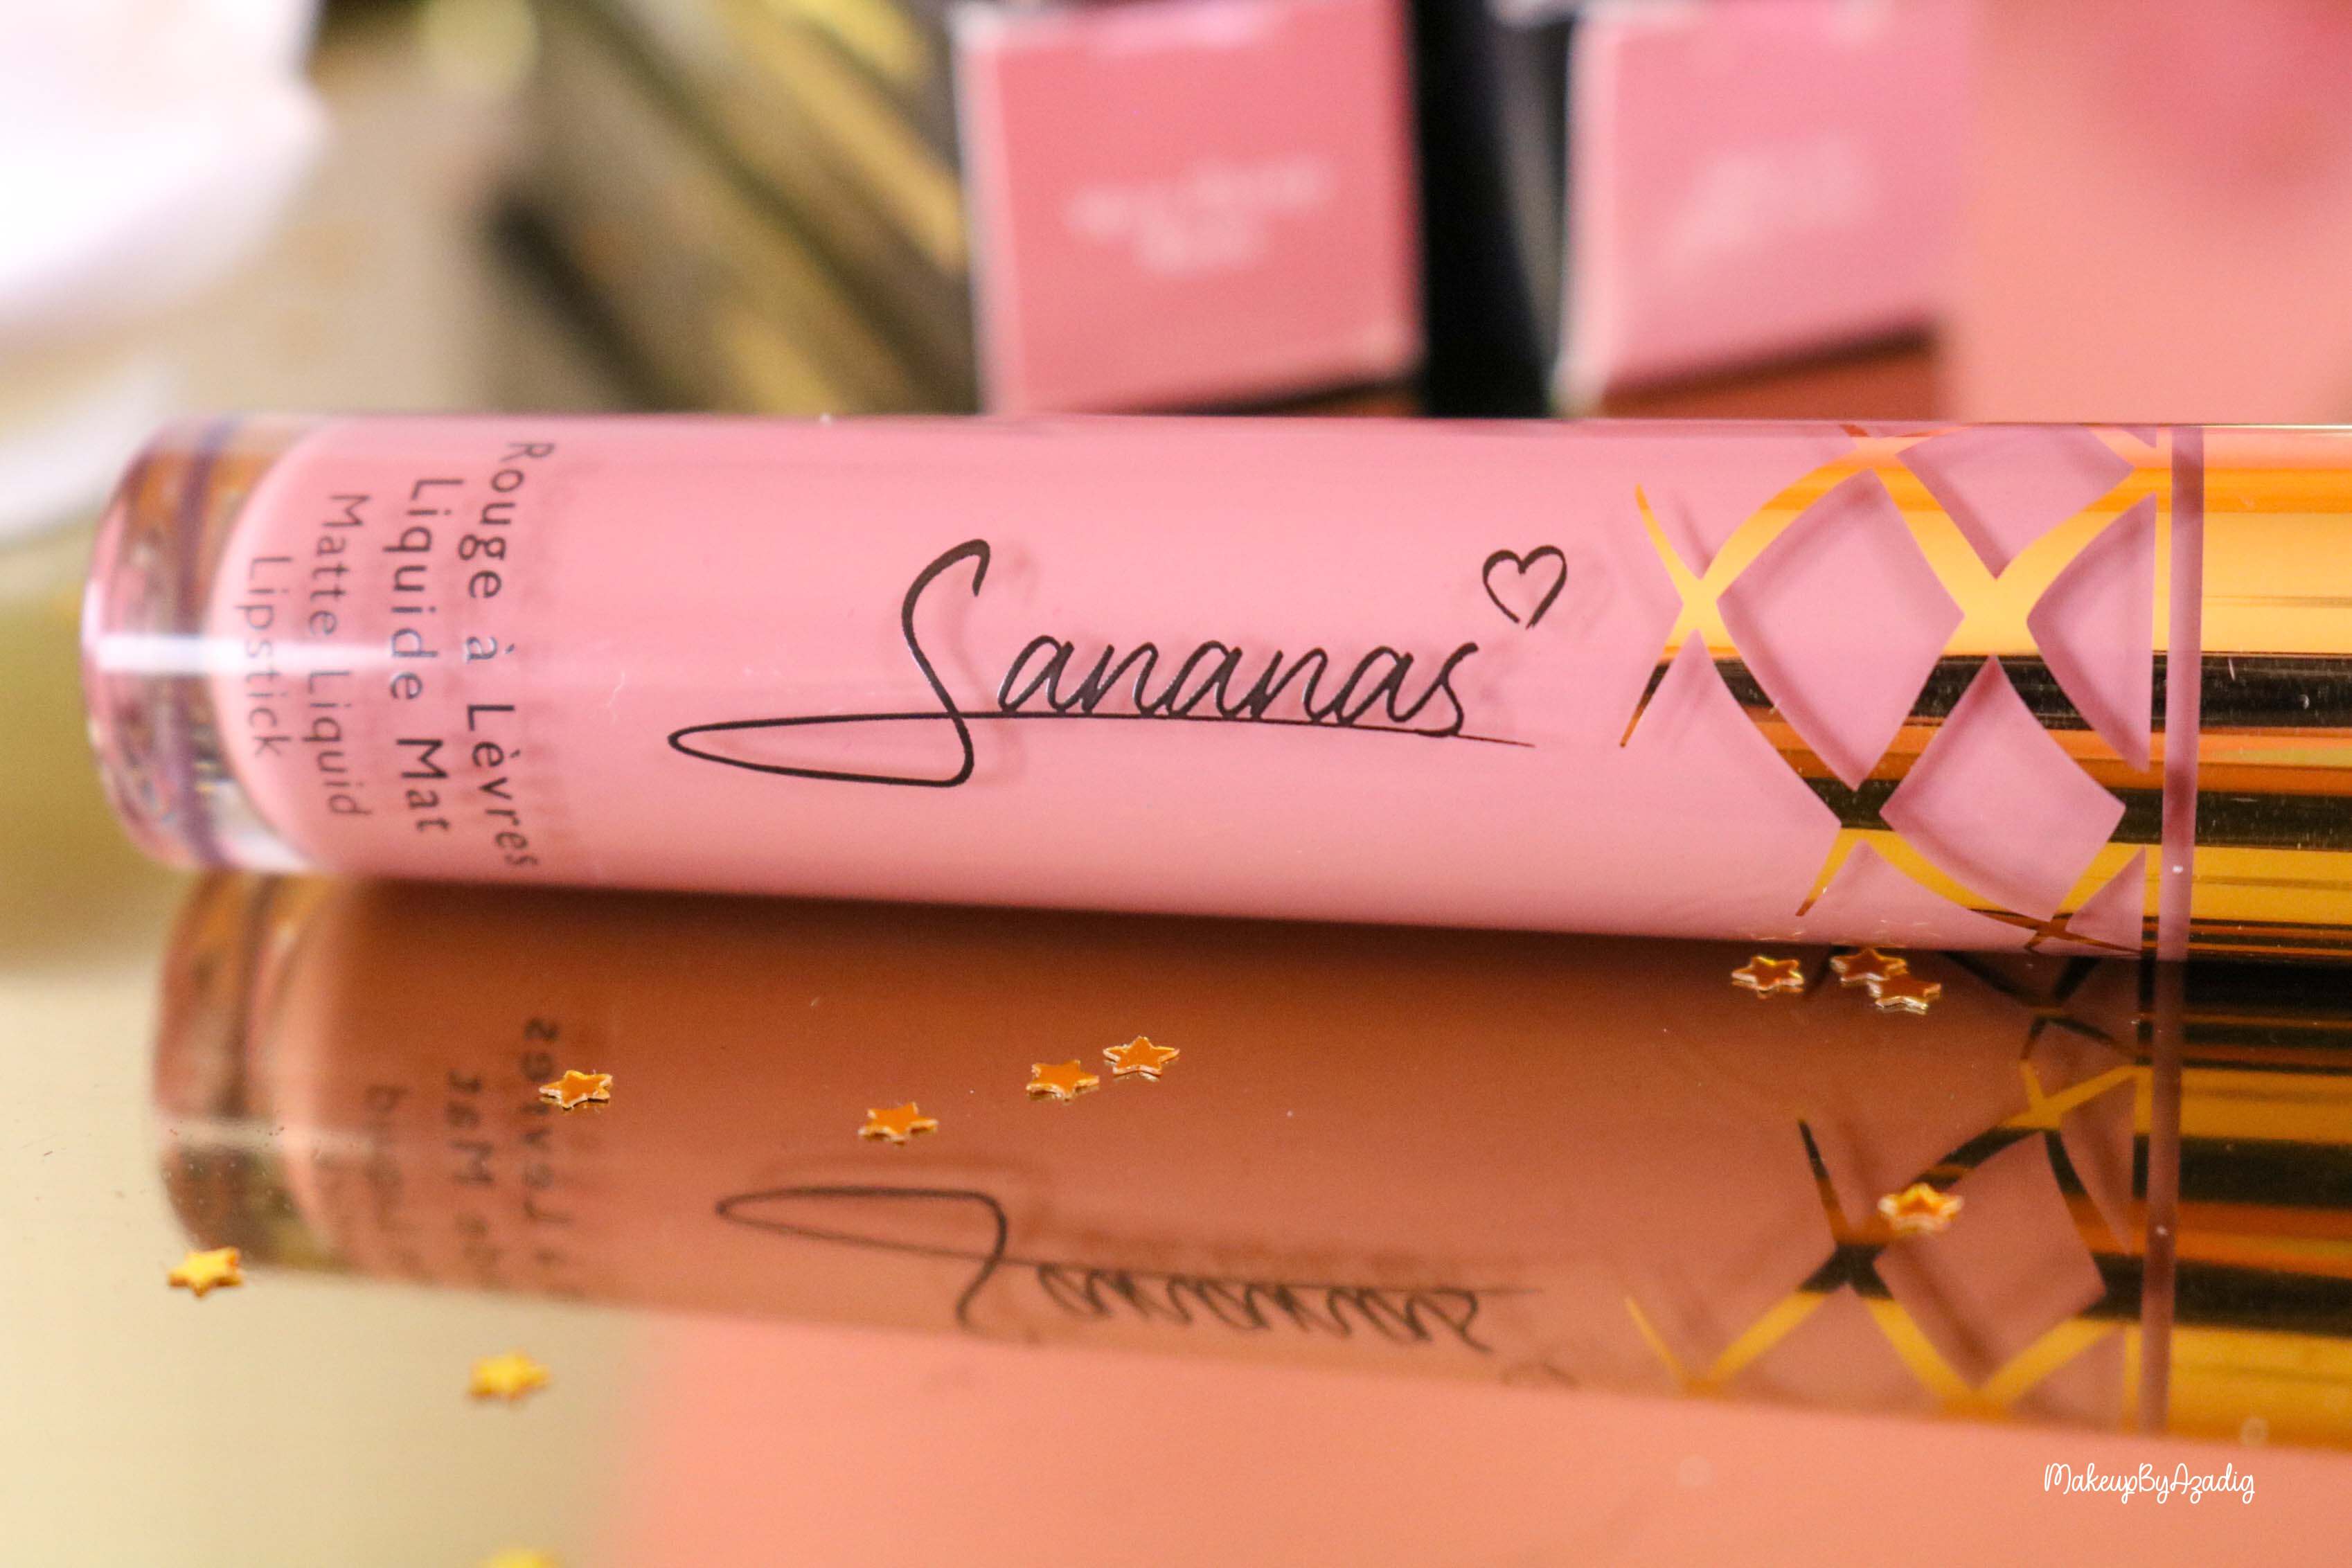 revue-marque-sananas-beauty-rouge-a-levres-vernis-kit-avis-prix-amazon-makeupbyazadig-dusty-pink-greige-rosier-signature